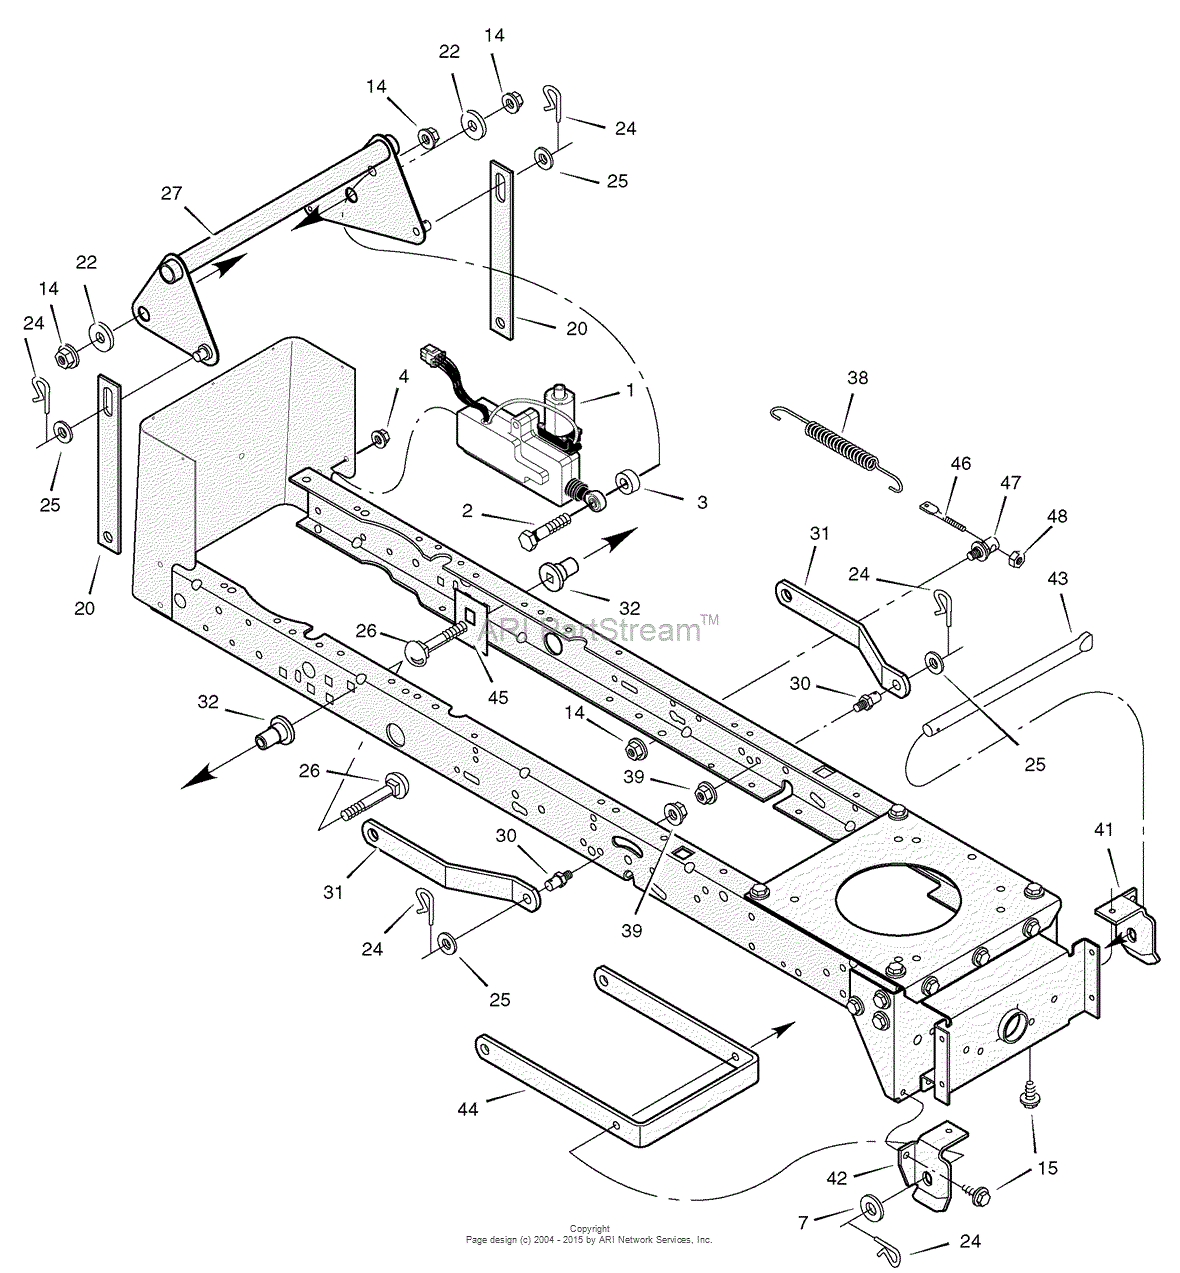 31 Craftsman Lawn Tractor Parts Diagram - Wiring Diagram List